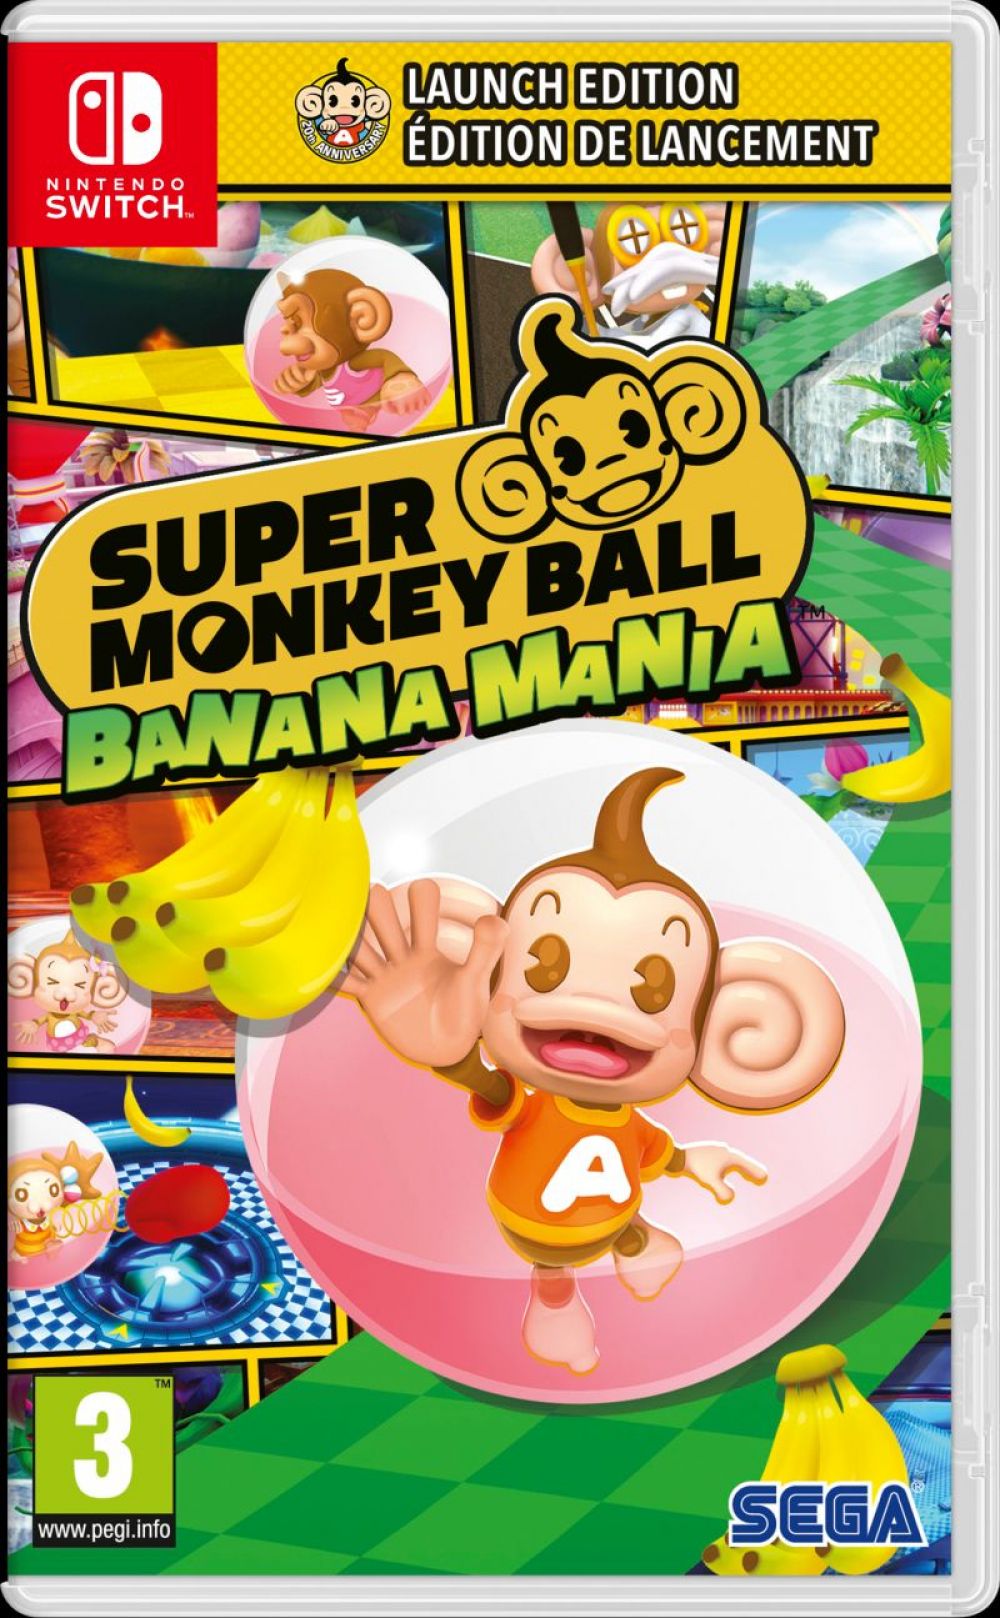 Super monkey ball banana mania: launch edition - nintendo switch